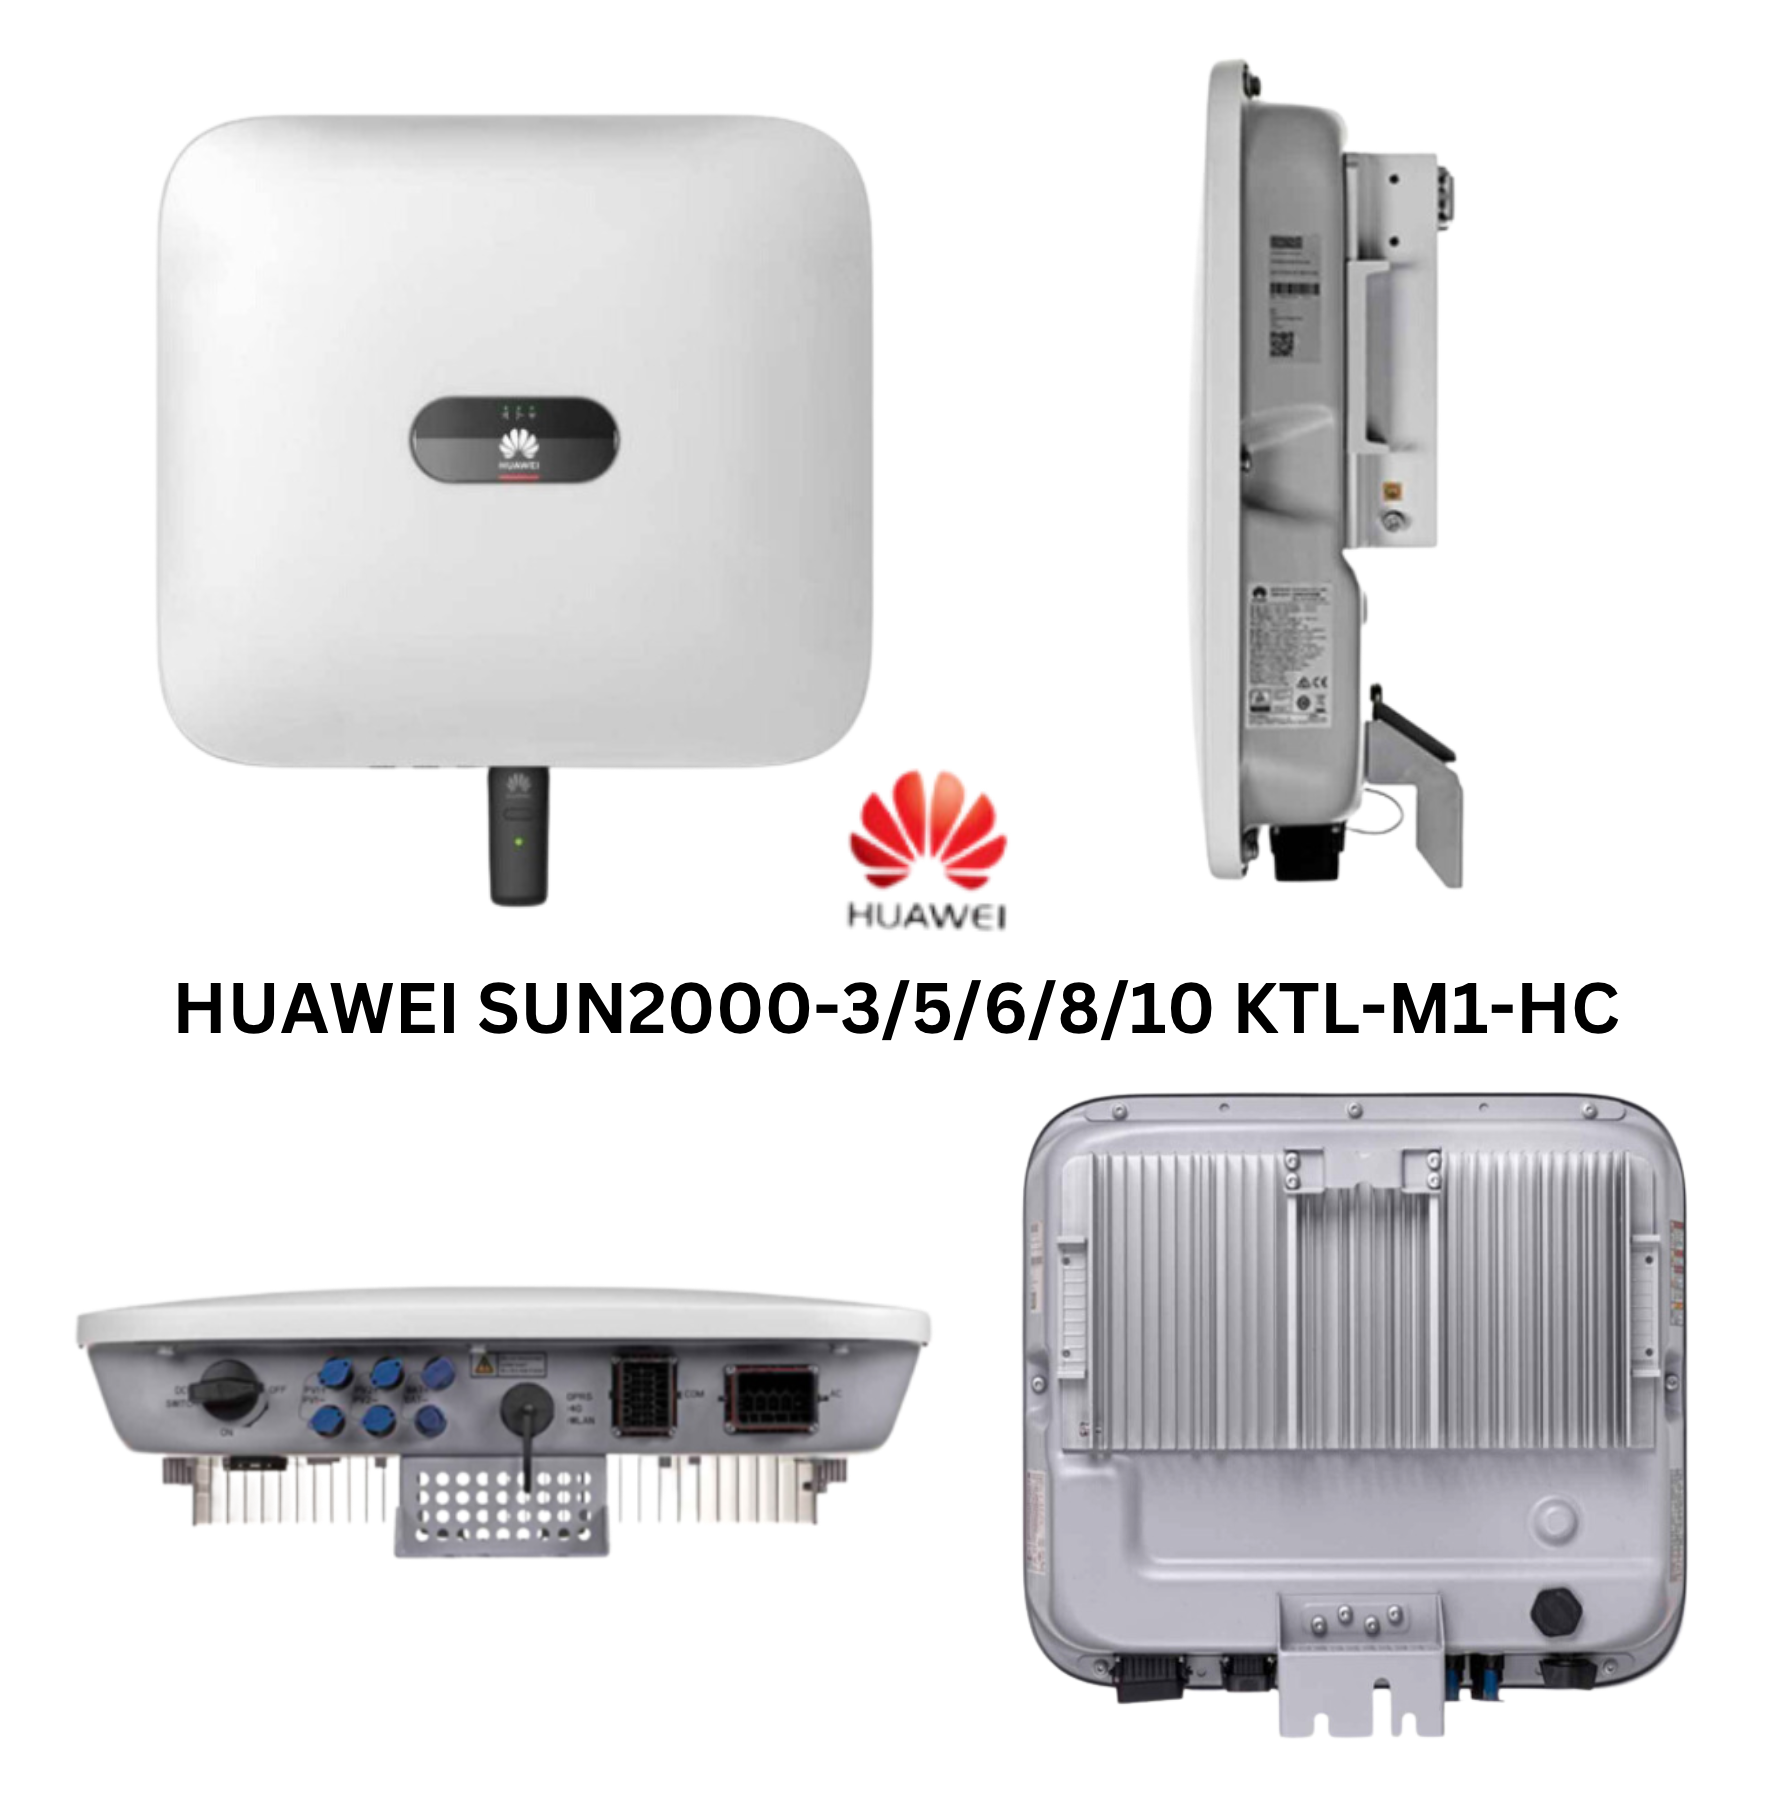 Huawei Komplettes PV-Set - [6kW + 5kWh]